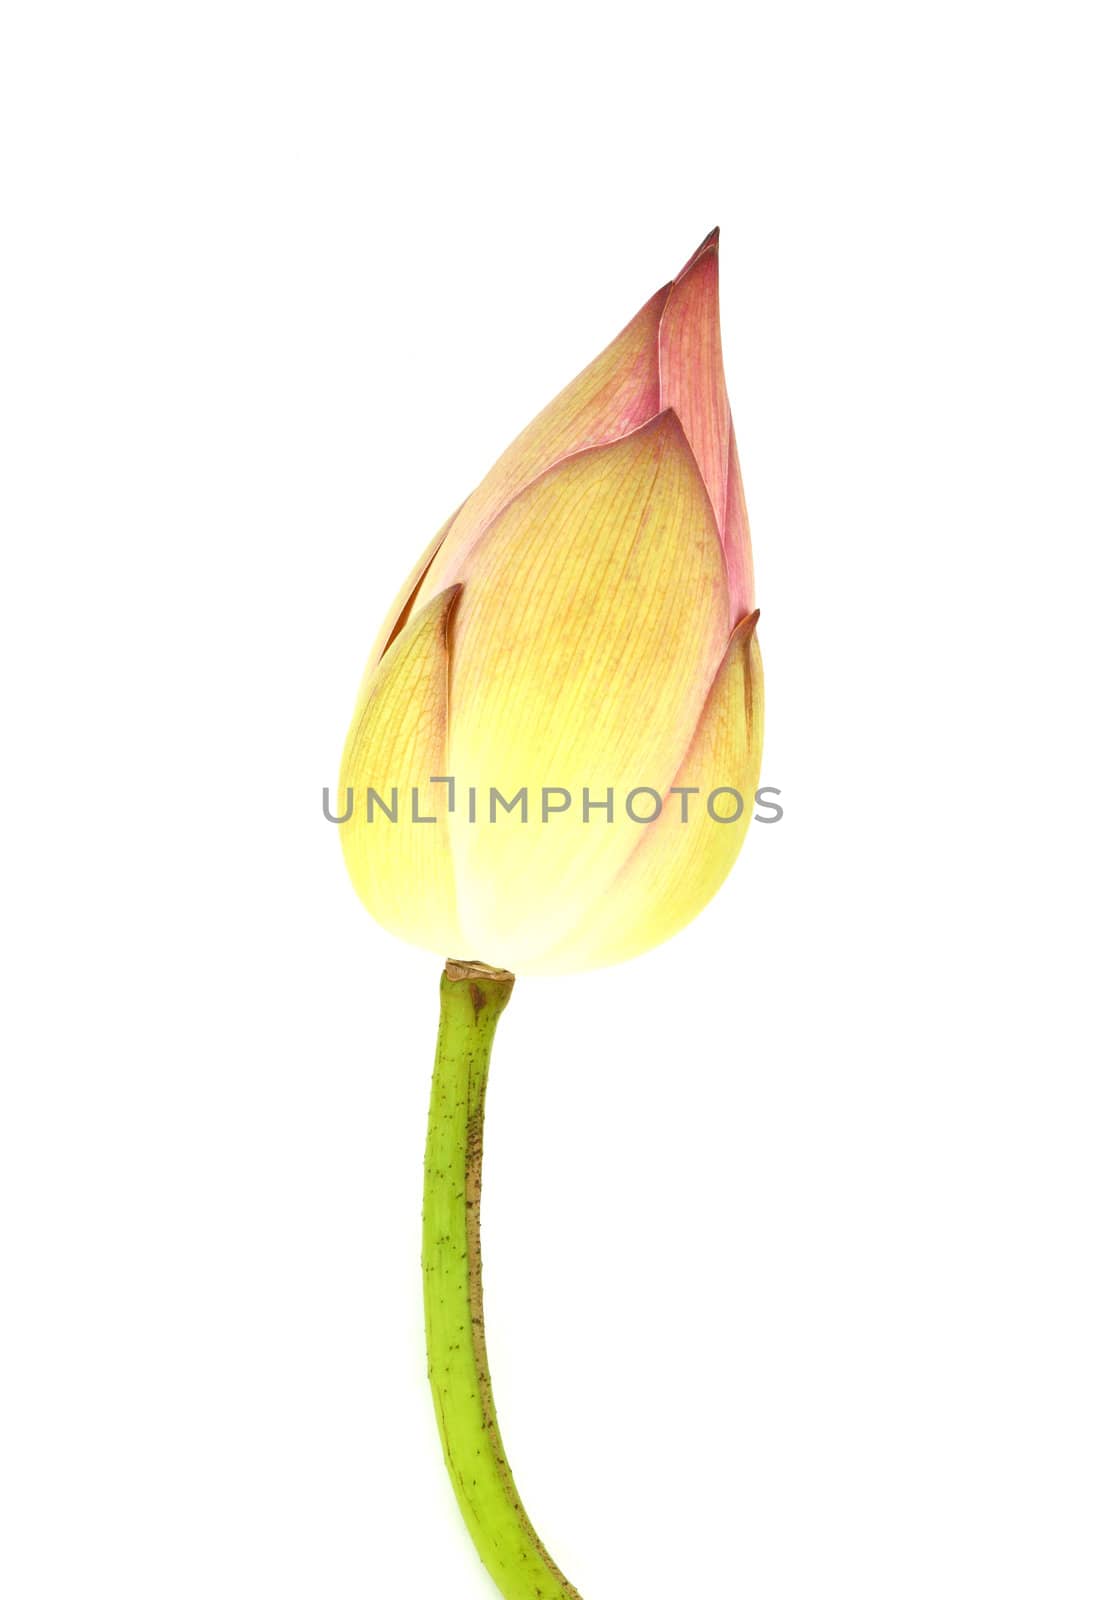 Bud lotus on white background